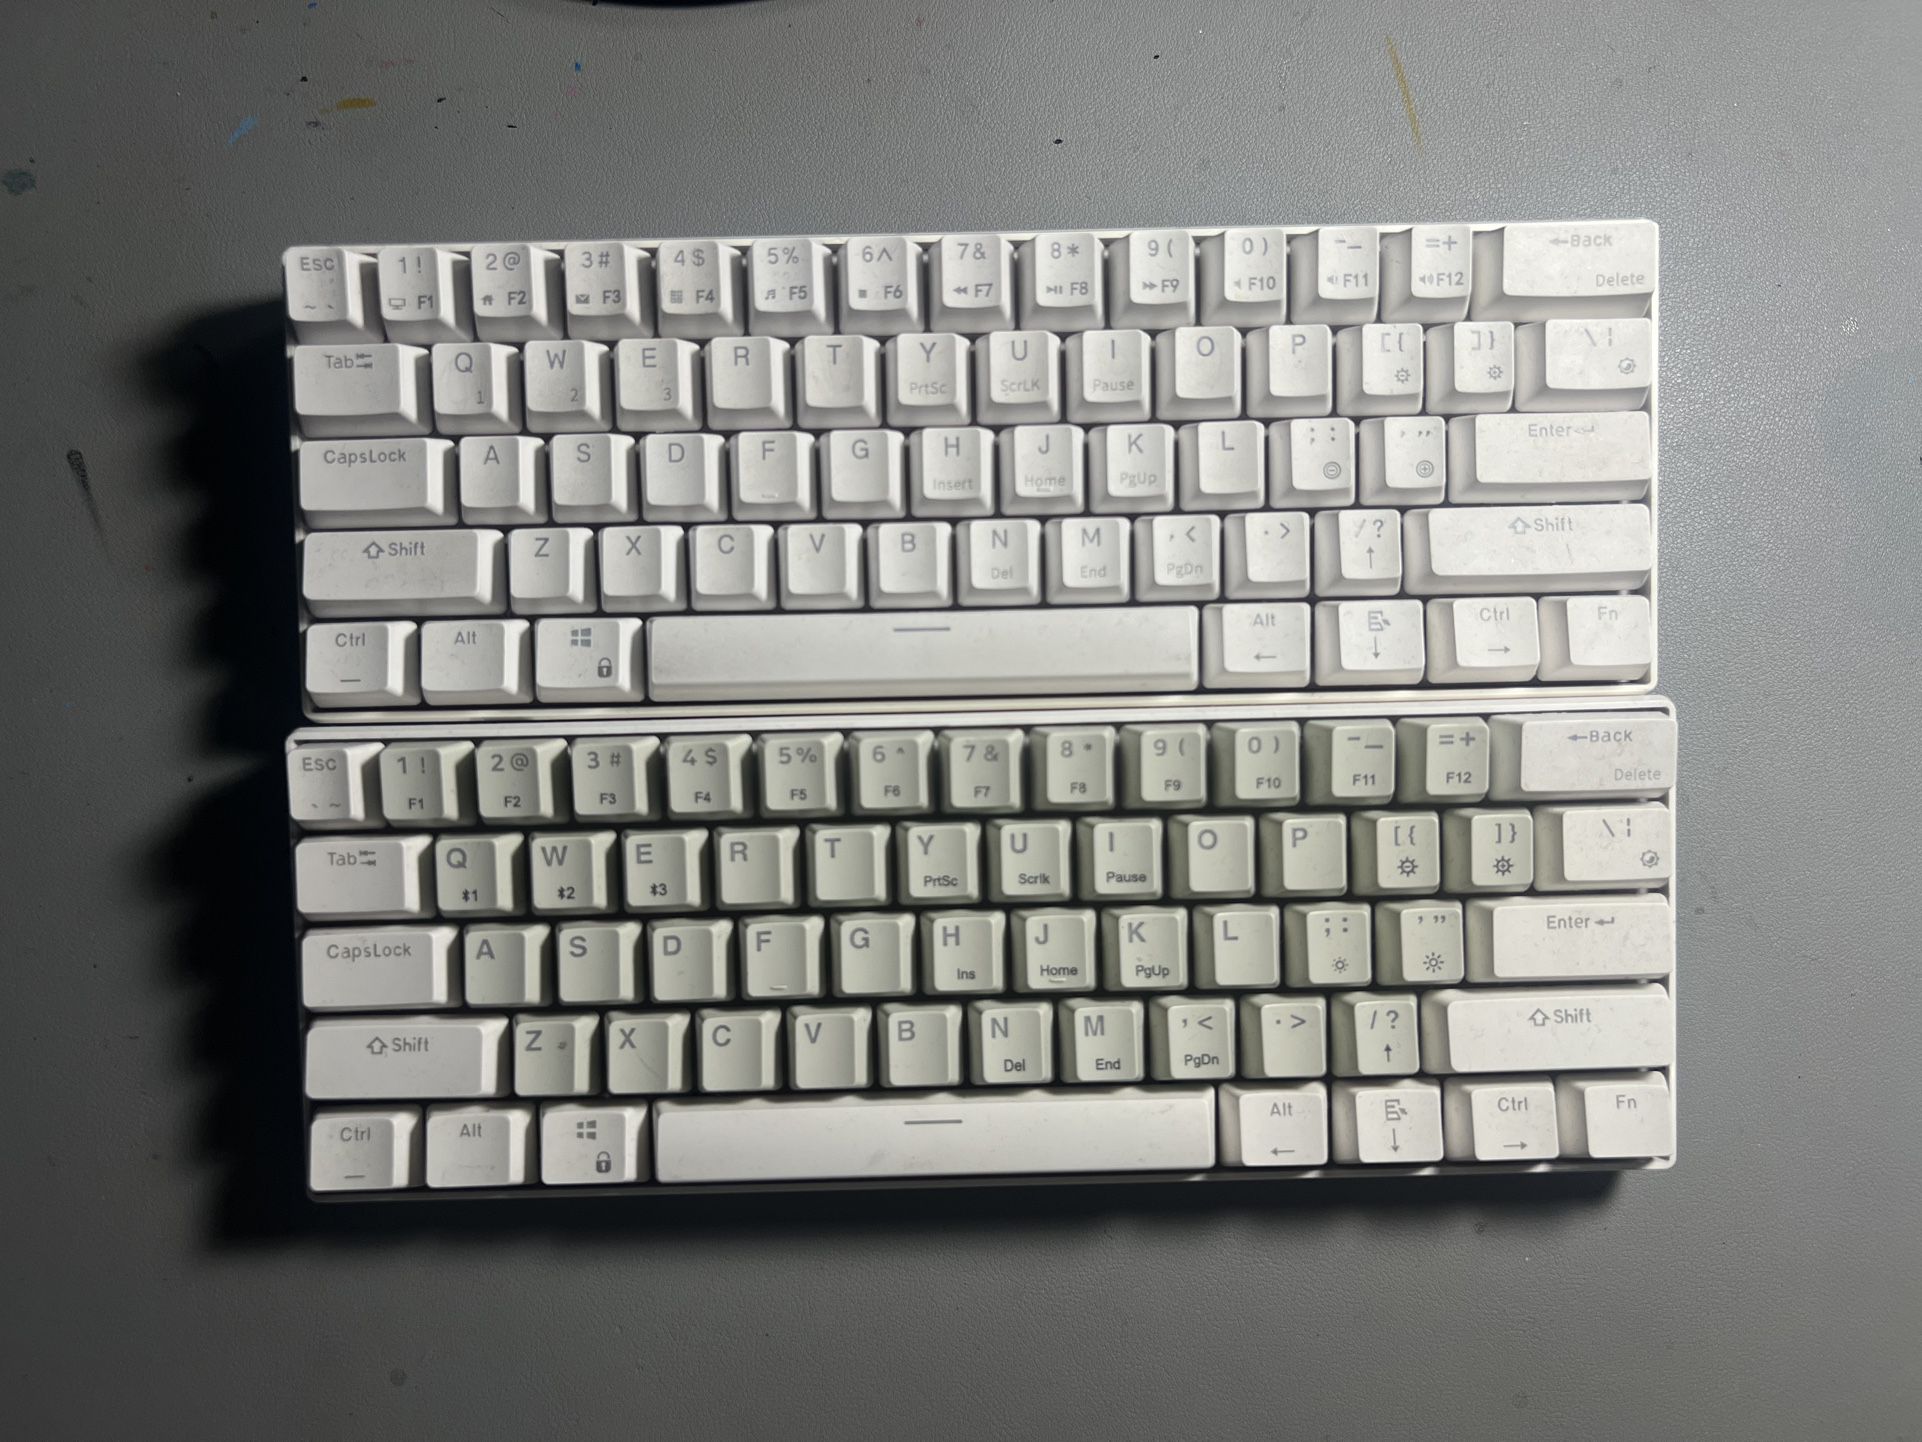 RK65 Keyboards